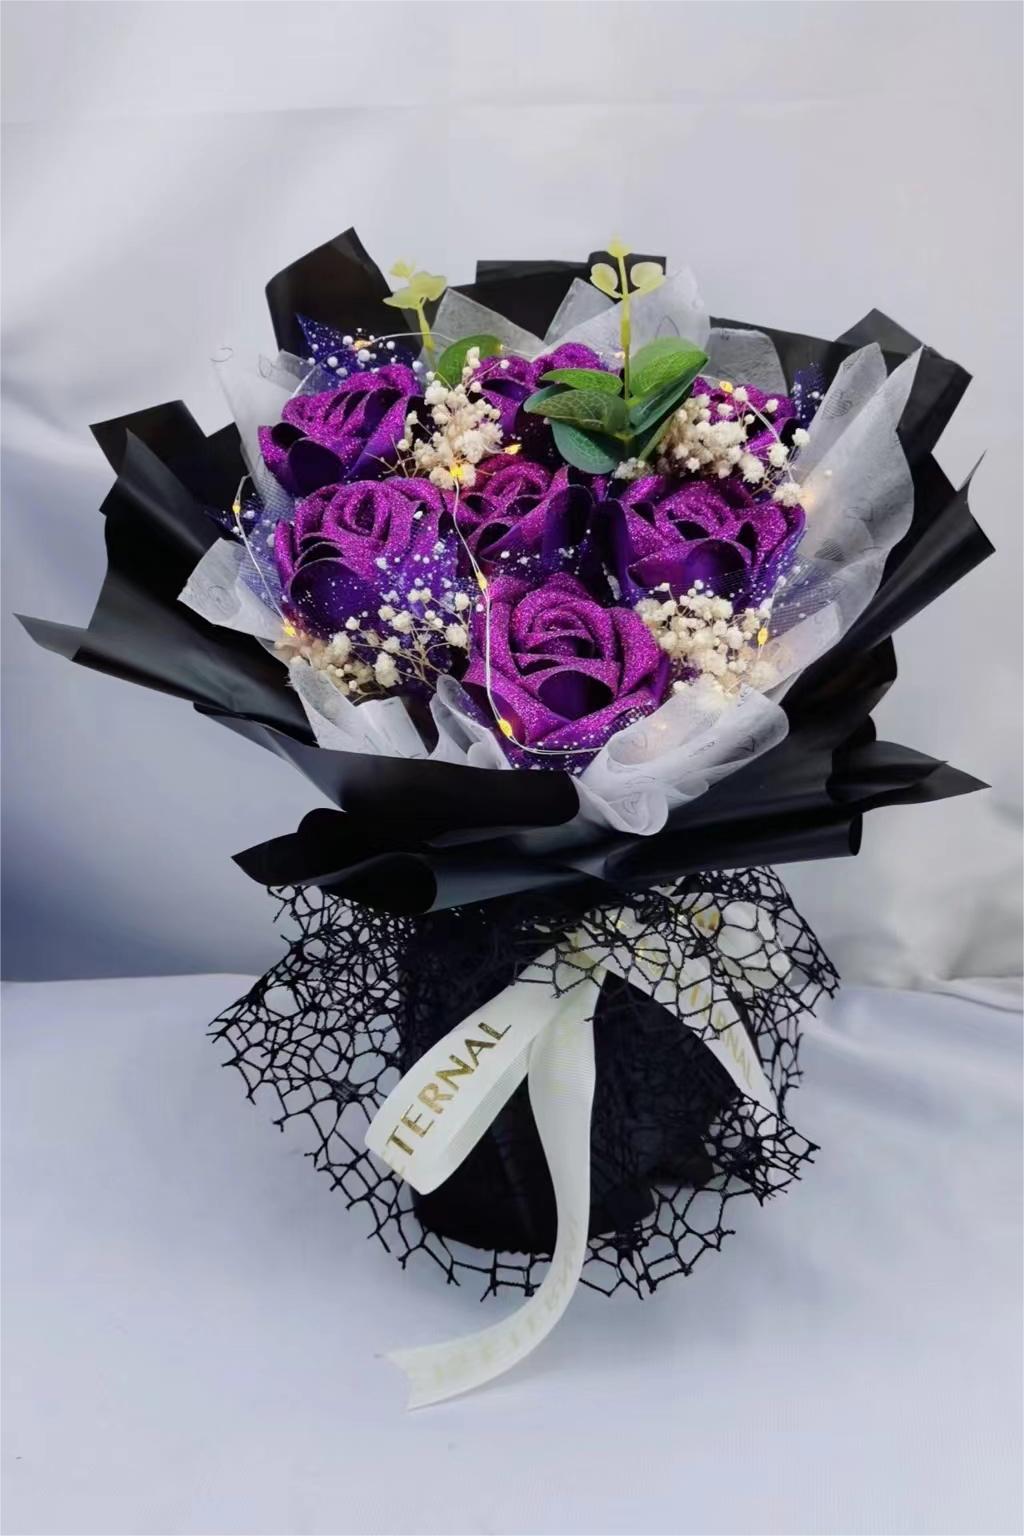 Handmade diy custom ribbon rose flower 7-11pcs finish products for birthday girlfriend gift